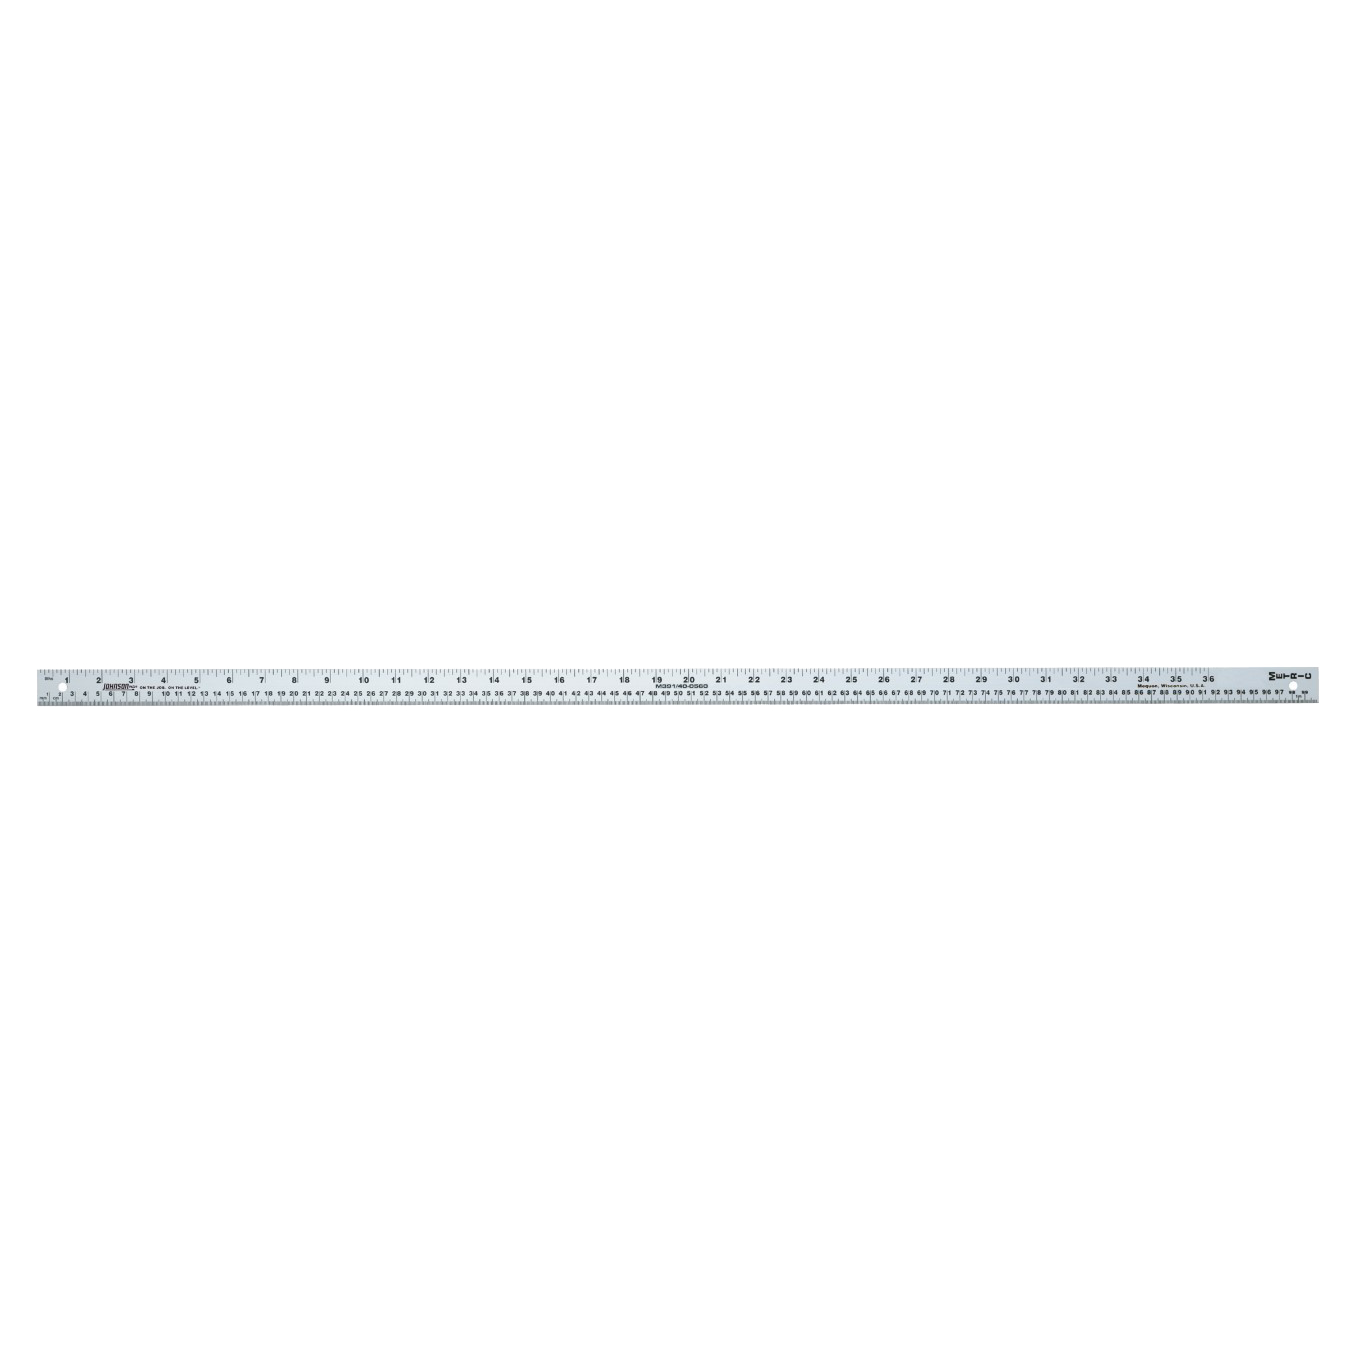 Aluminum inch metric meterstick. Clipart ruler rule